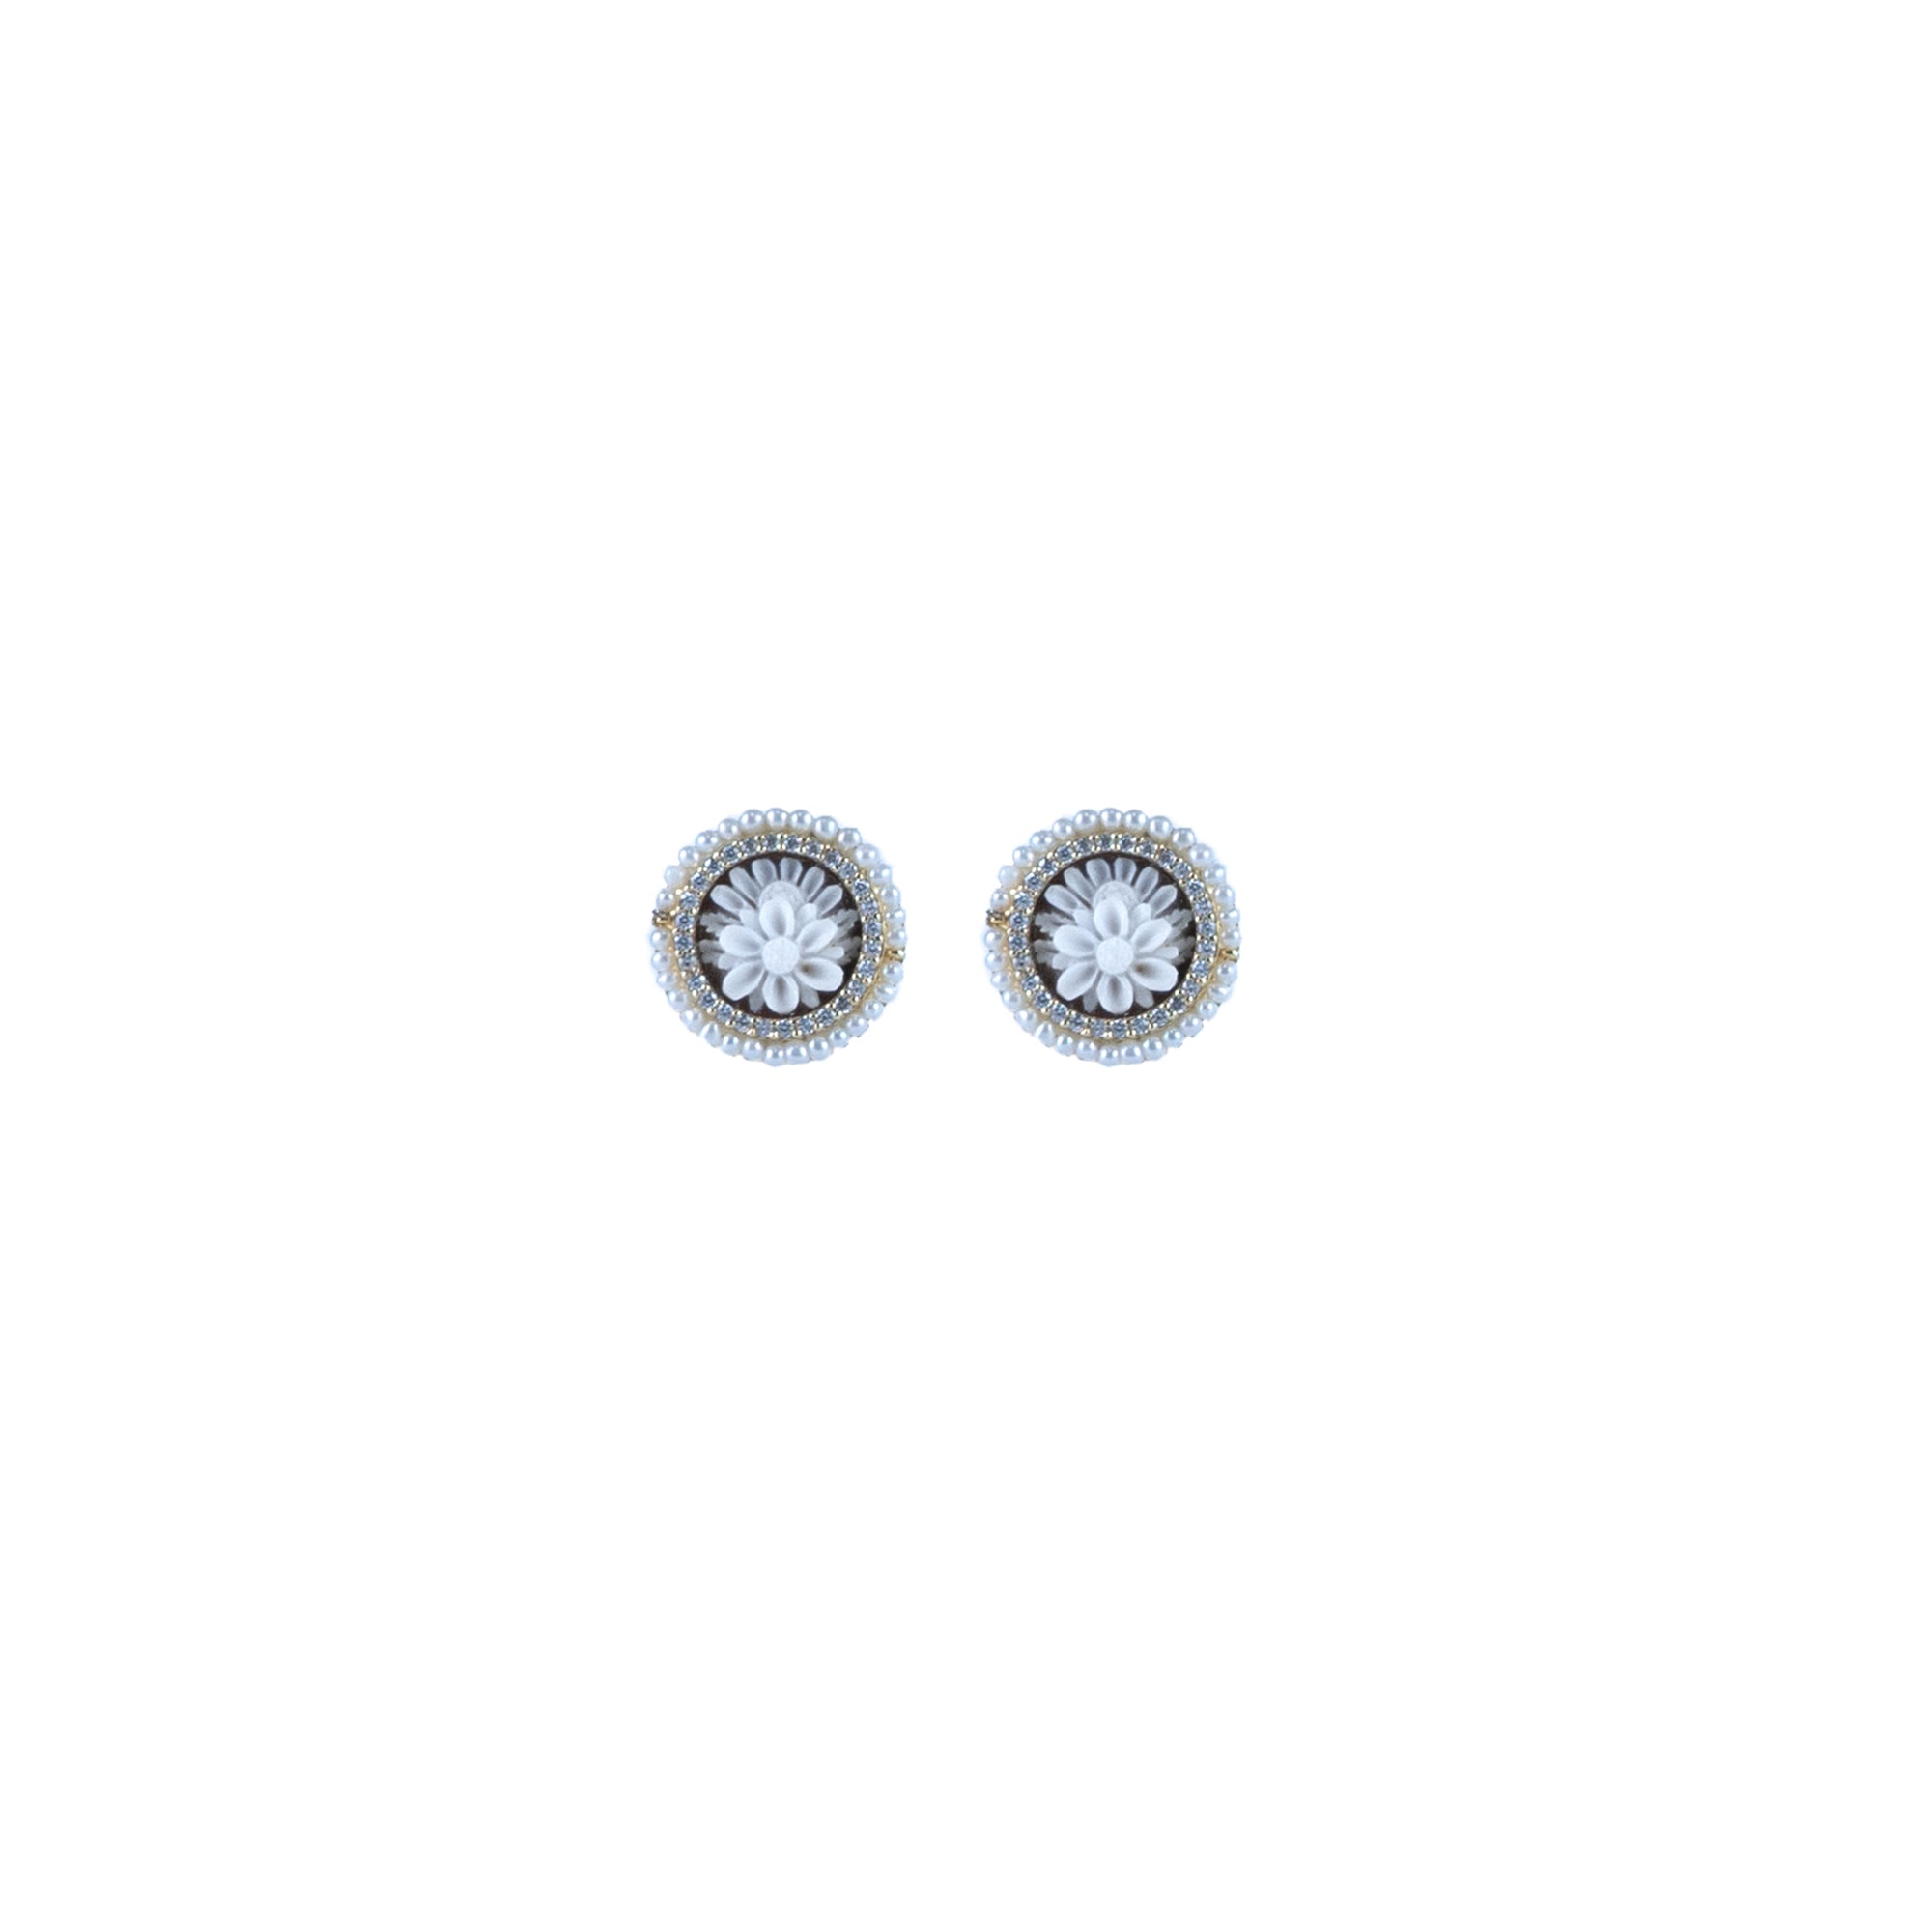 Soara earrings - CD50